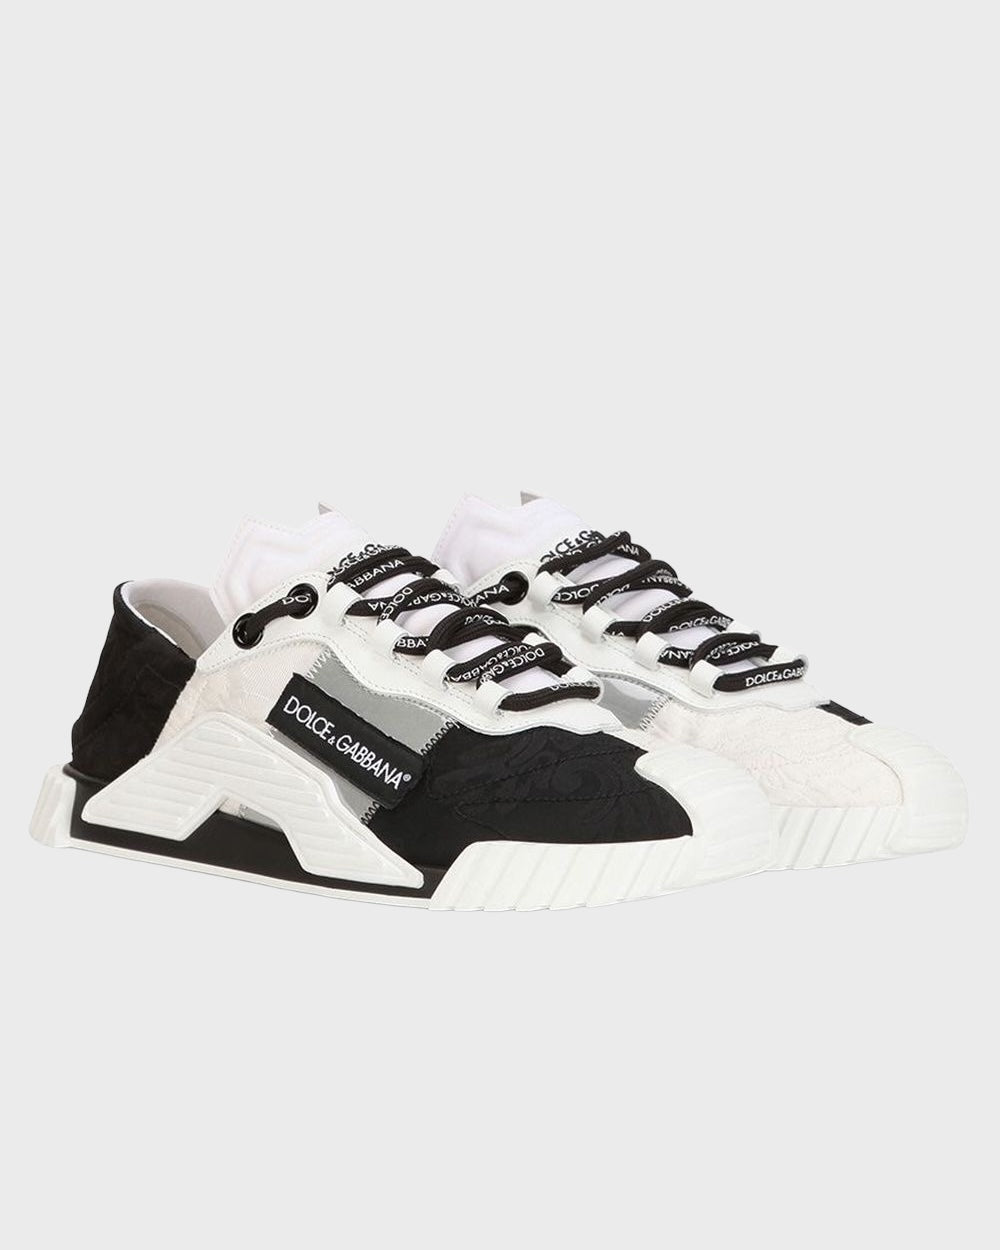 Dolce & Gabbana | Zwart / Wit Sneakers Unisex